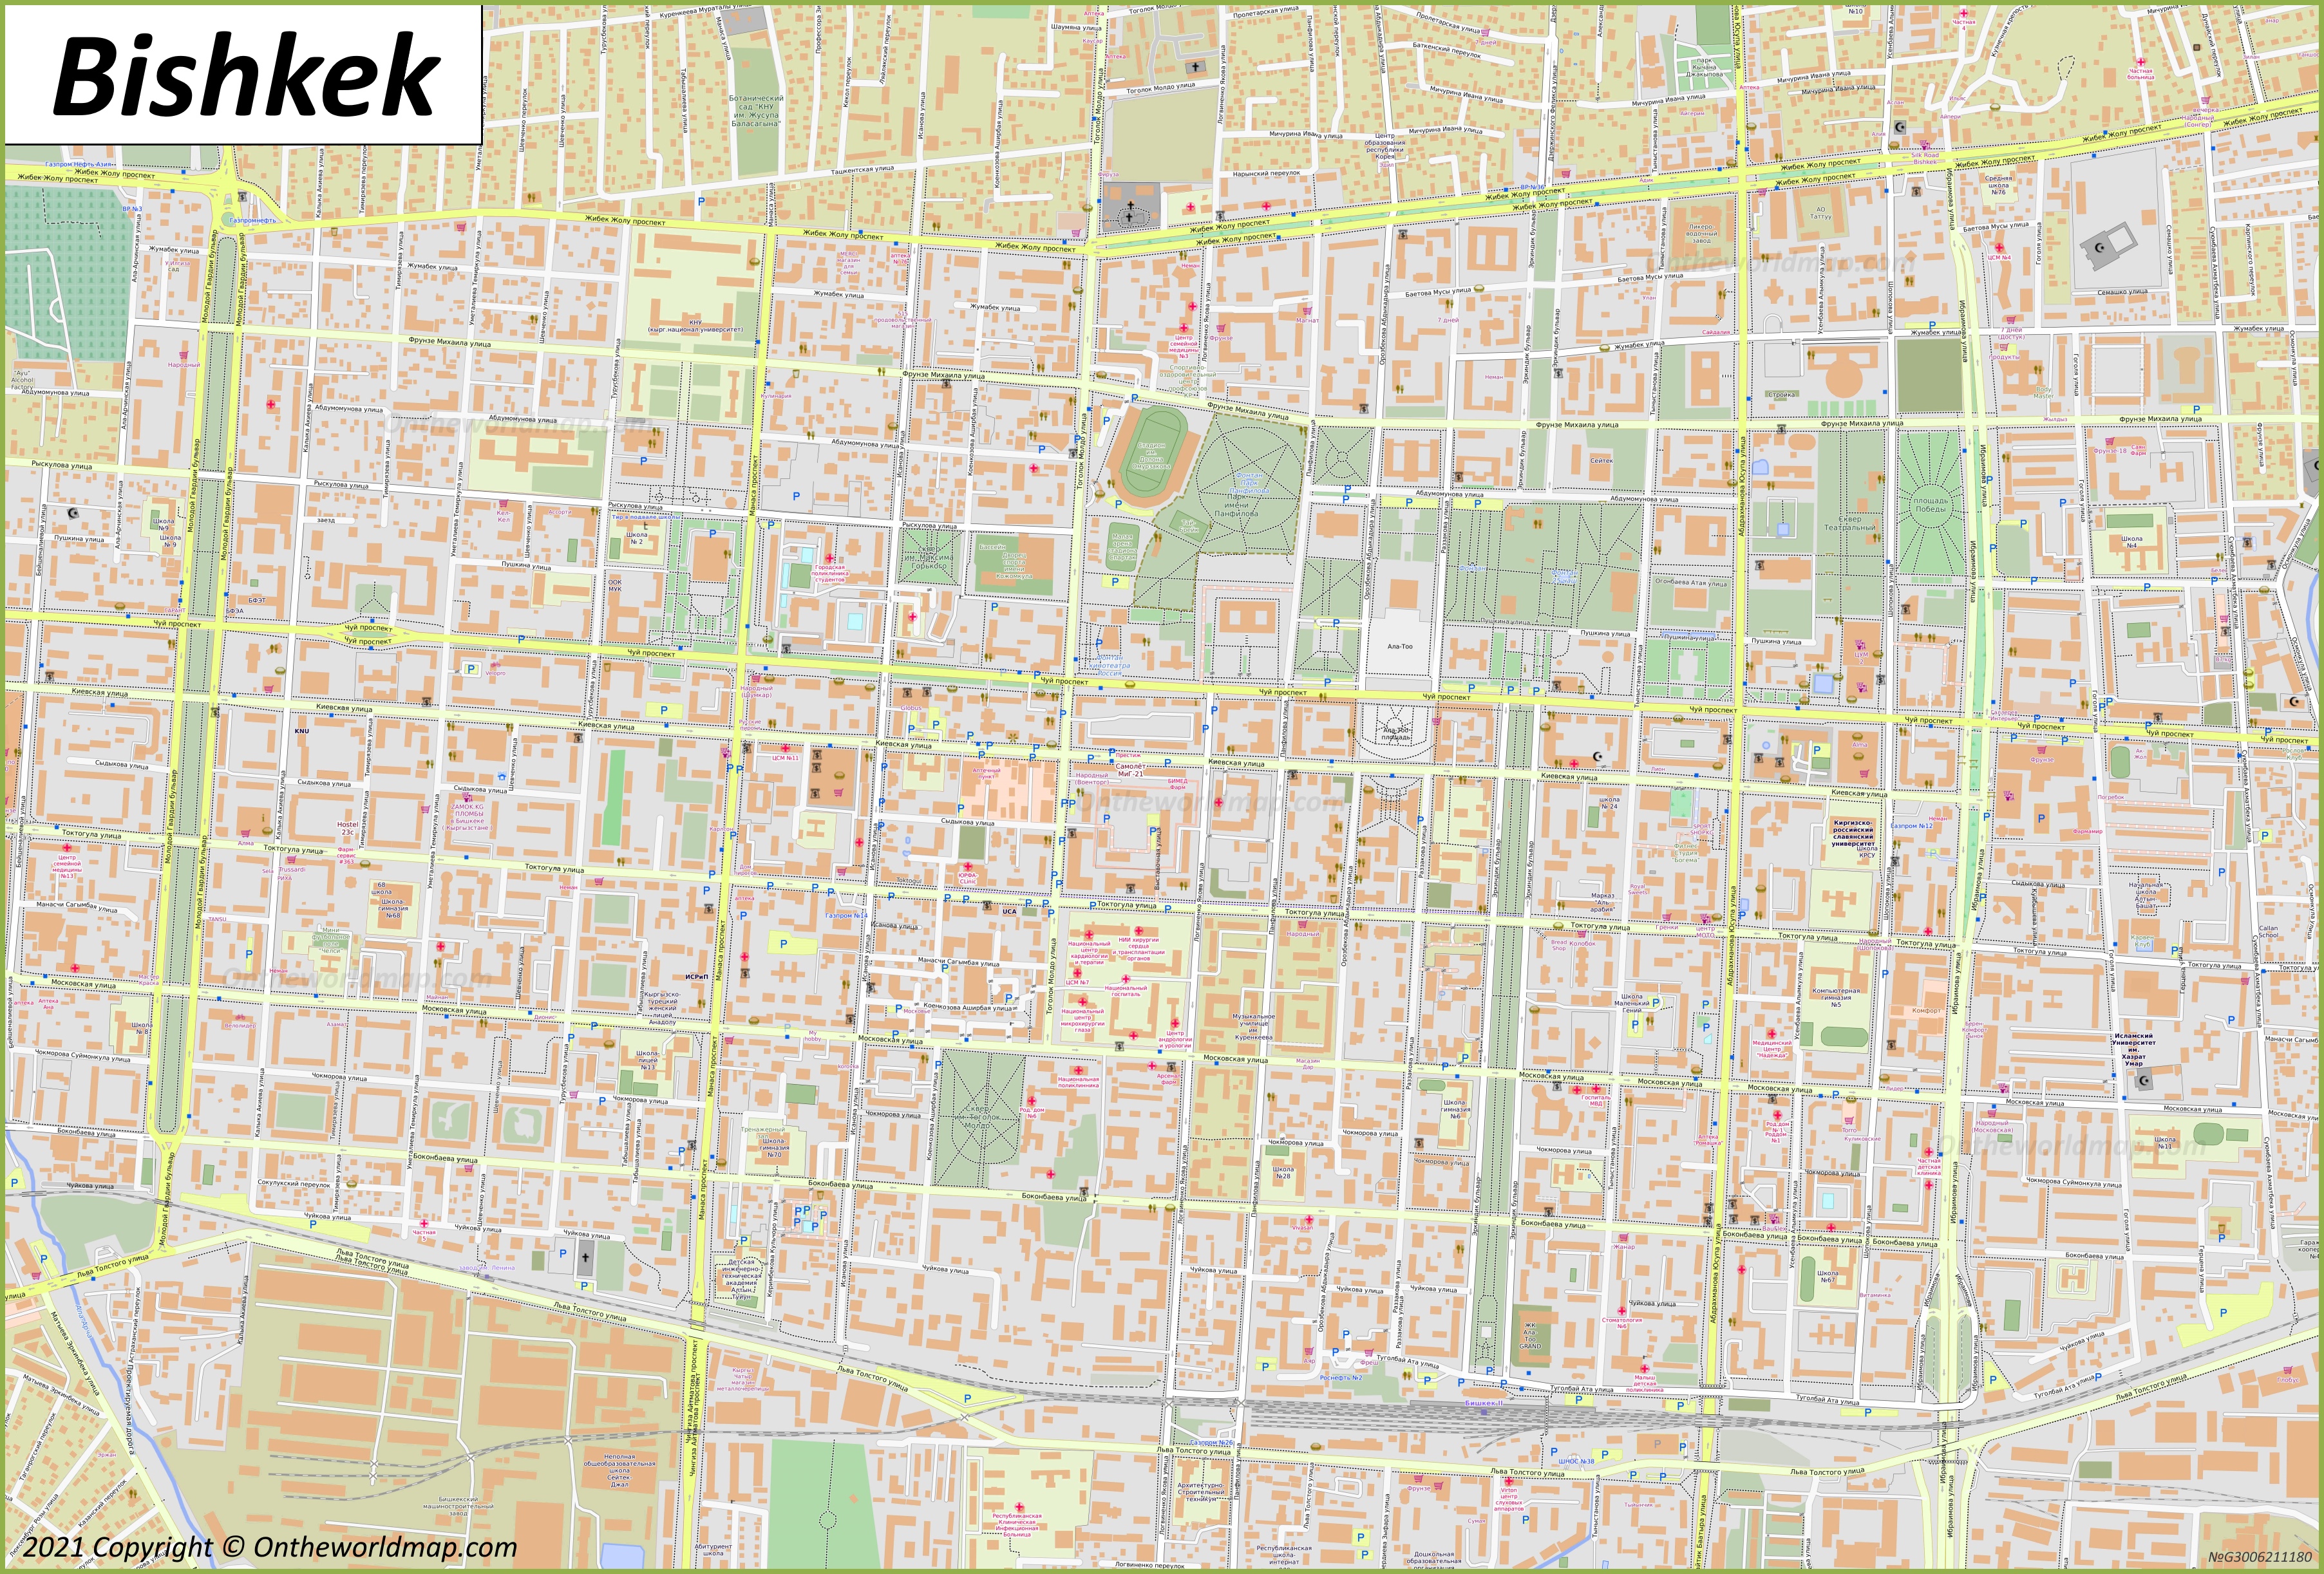 Bishkek City Center Map